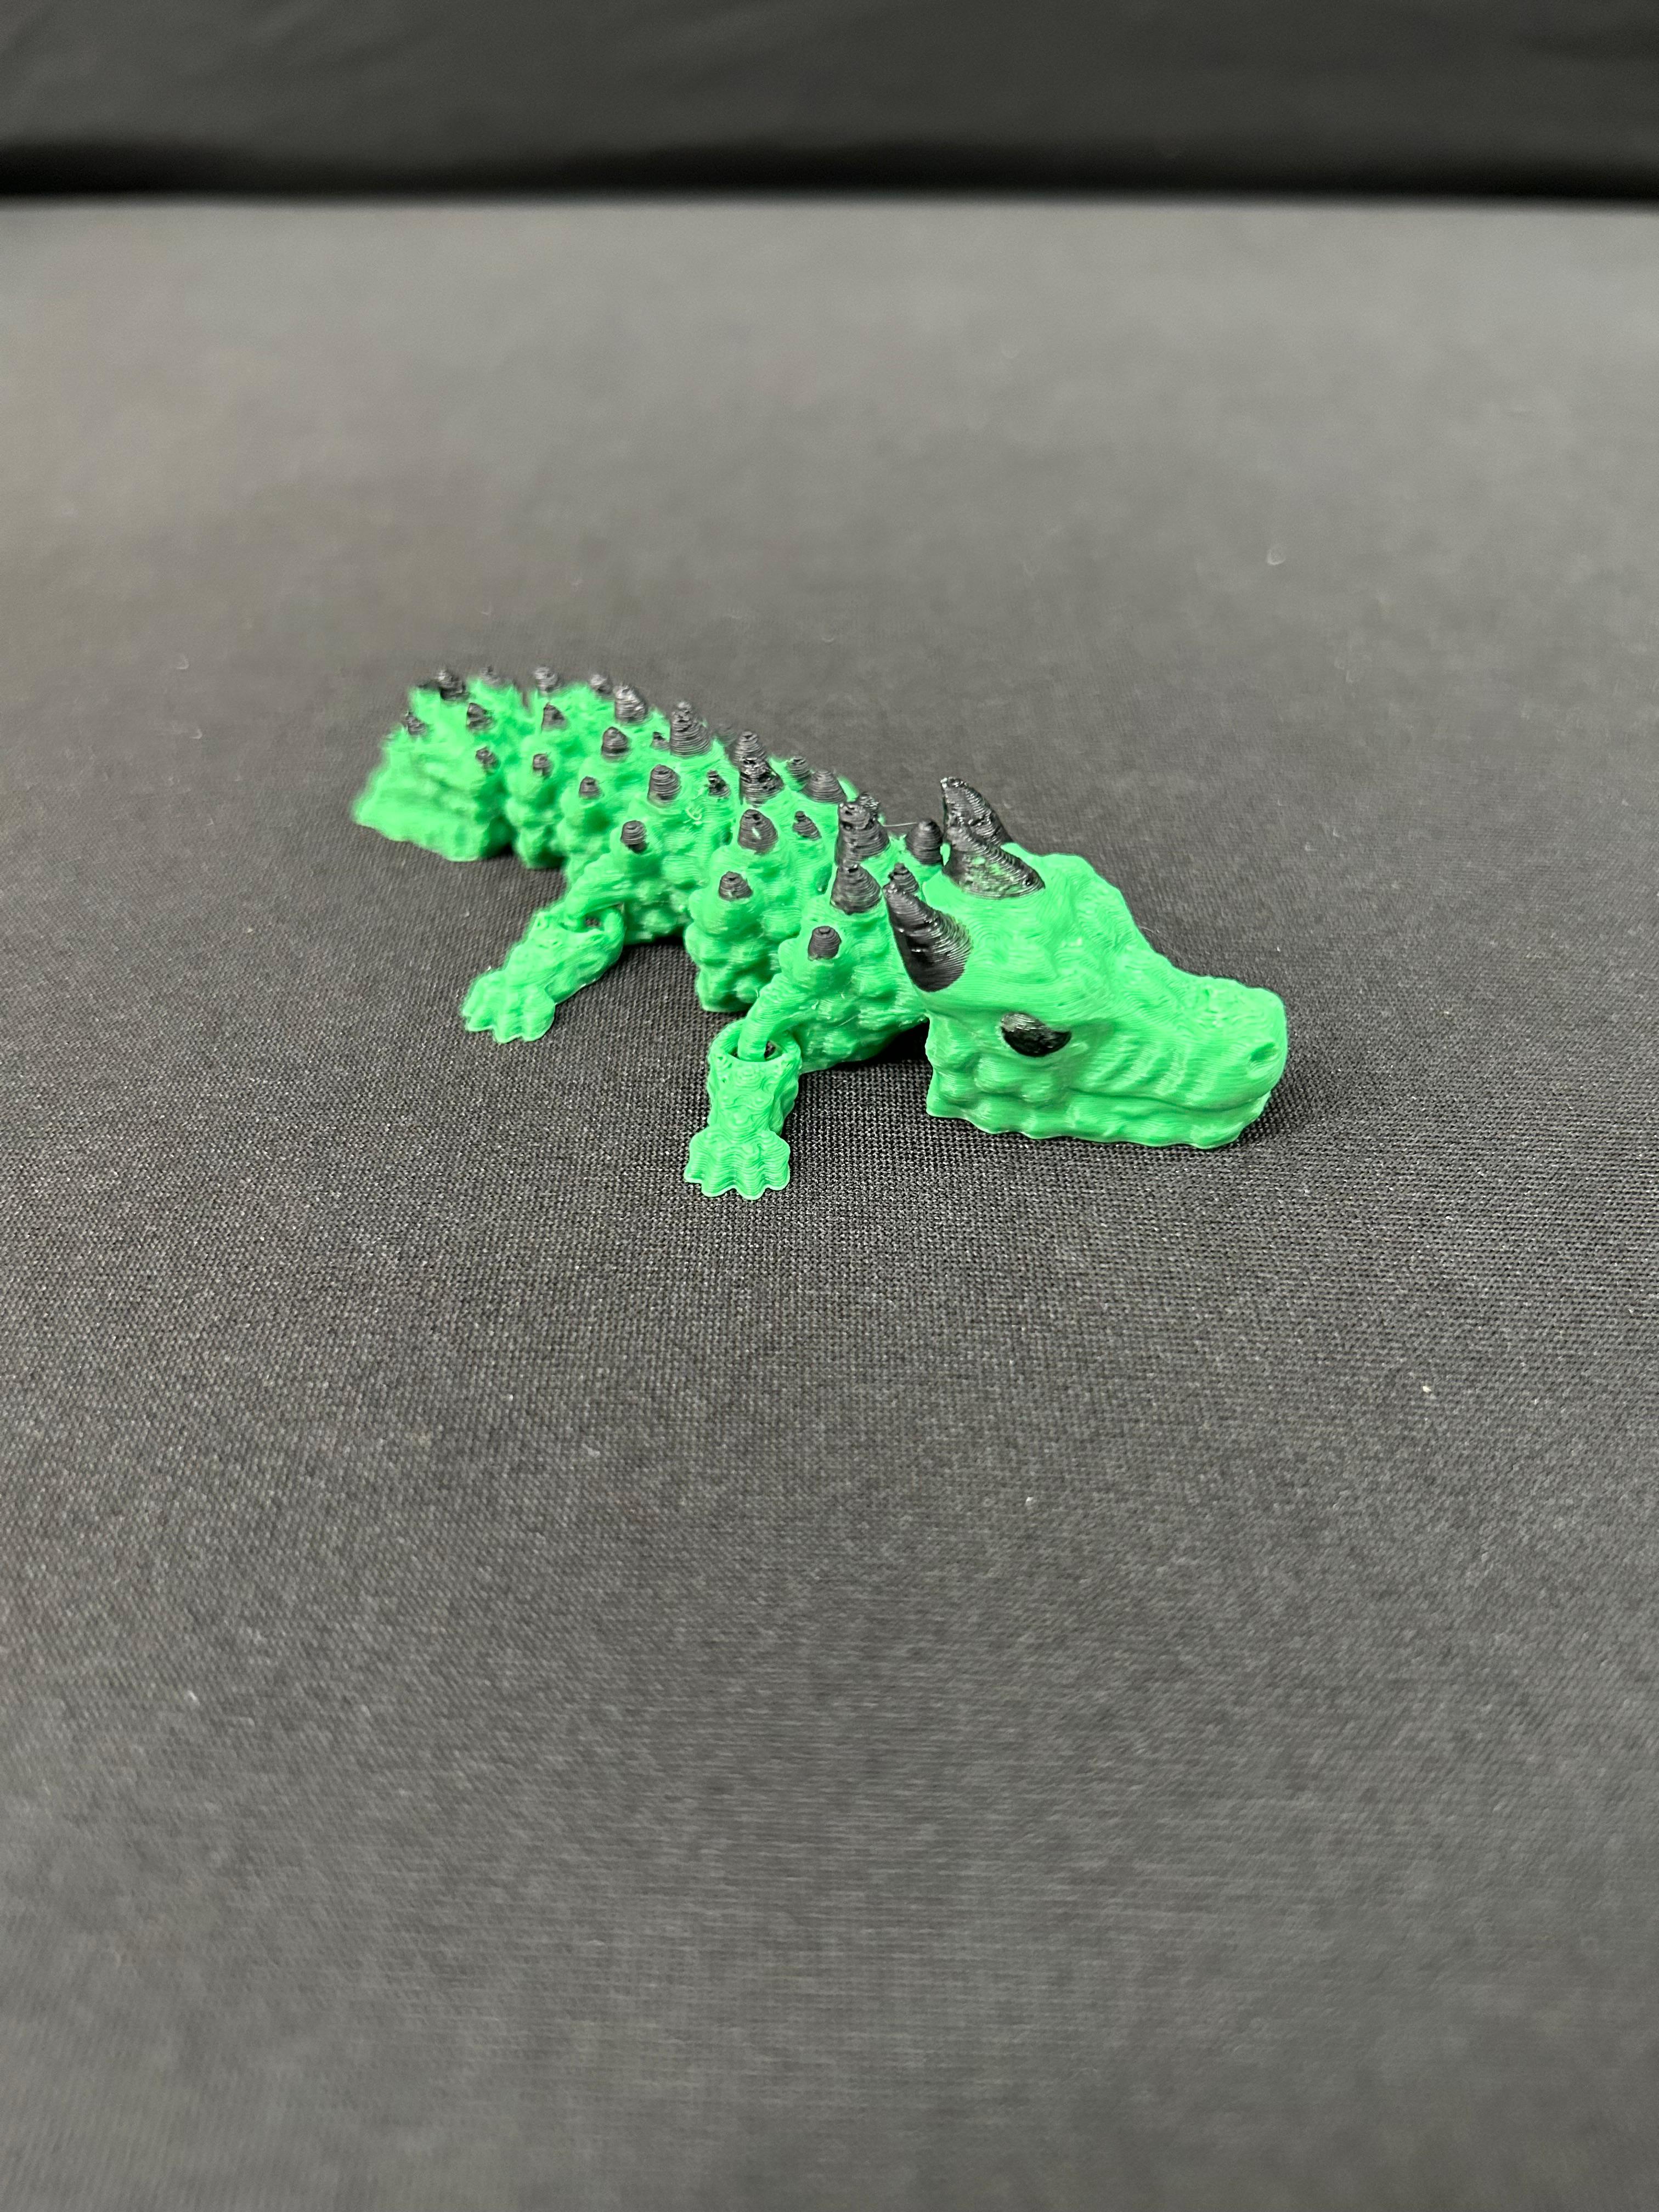 Gator Dragon Small 3d model